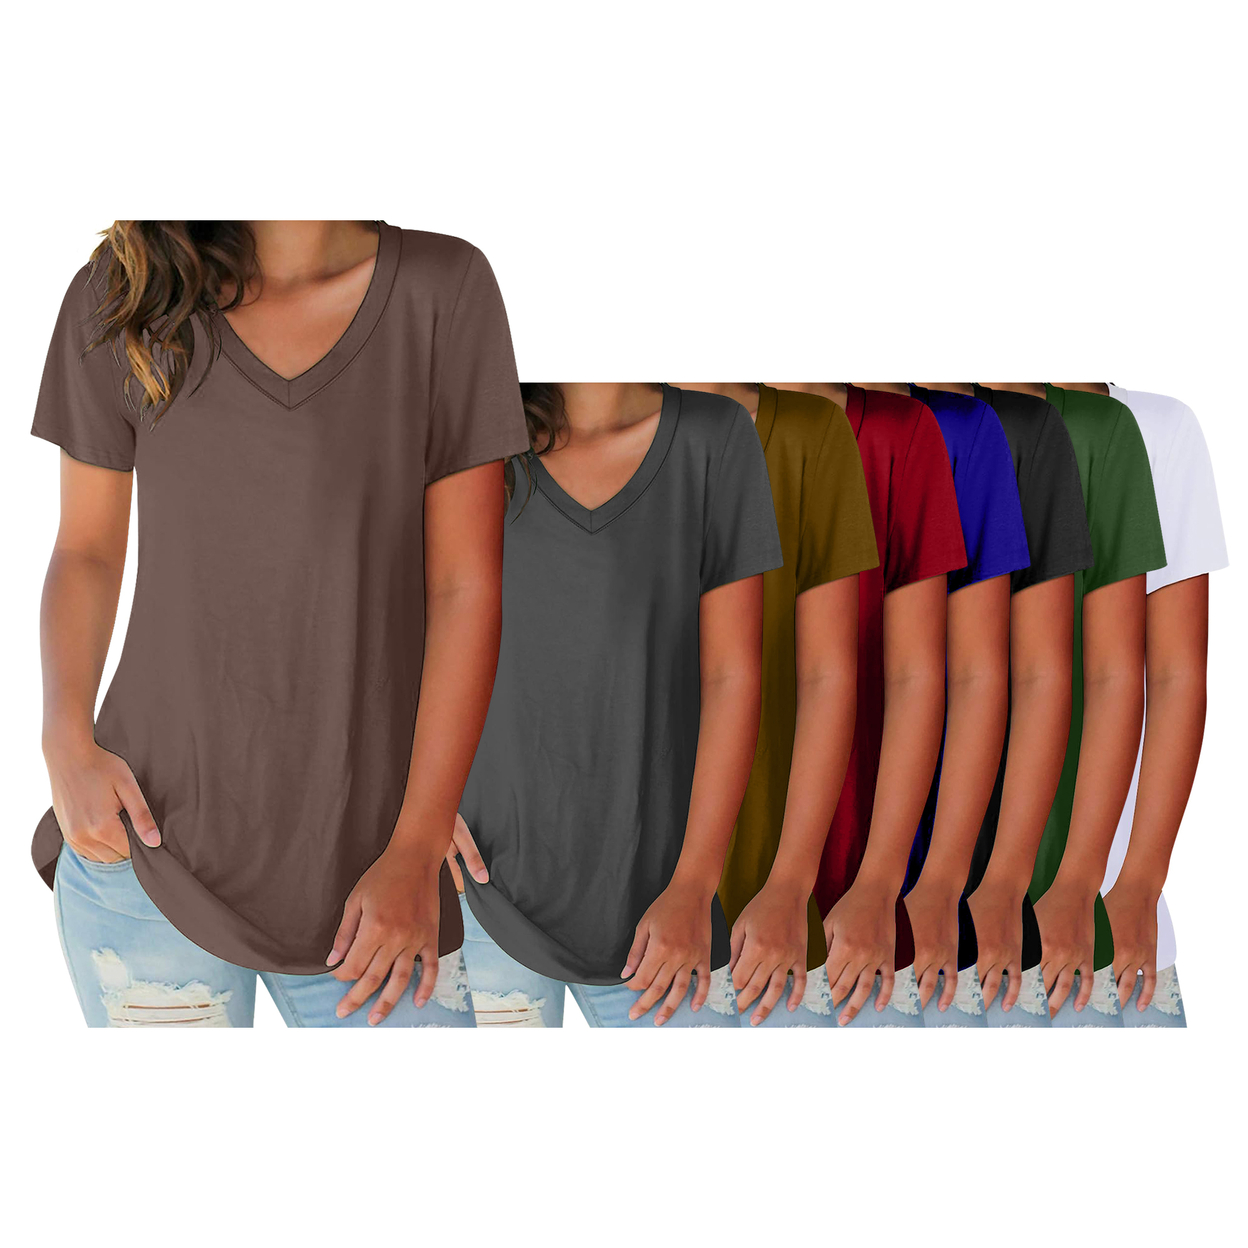 Women's Ultra-Soft Smooth Cotton Blend Basic V-Neck Short Sleeve Shirts - Brown, Medium